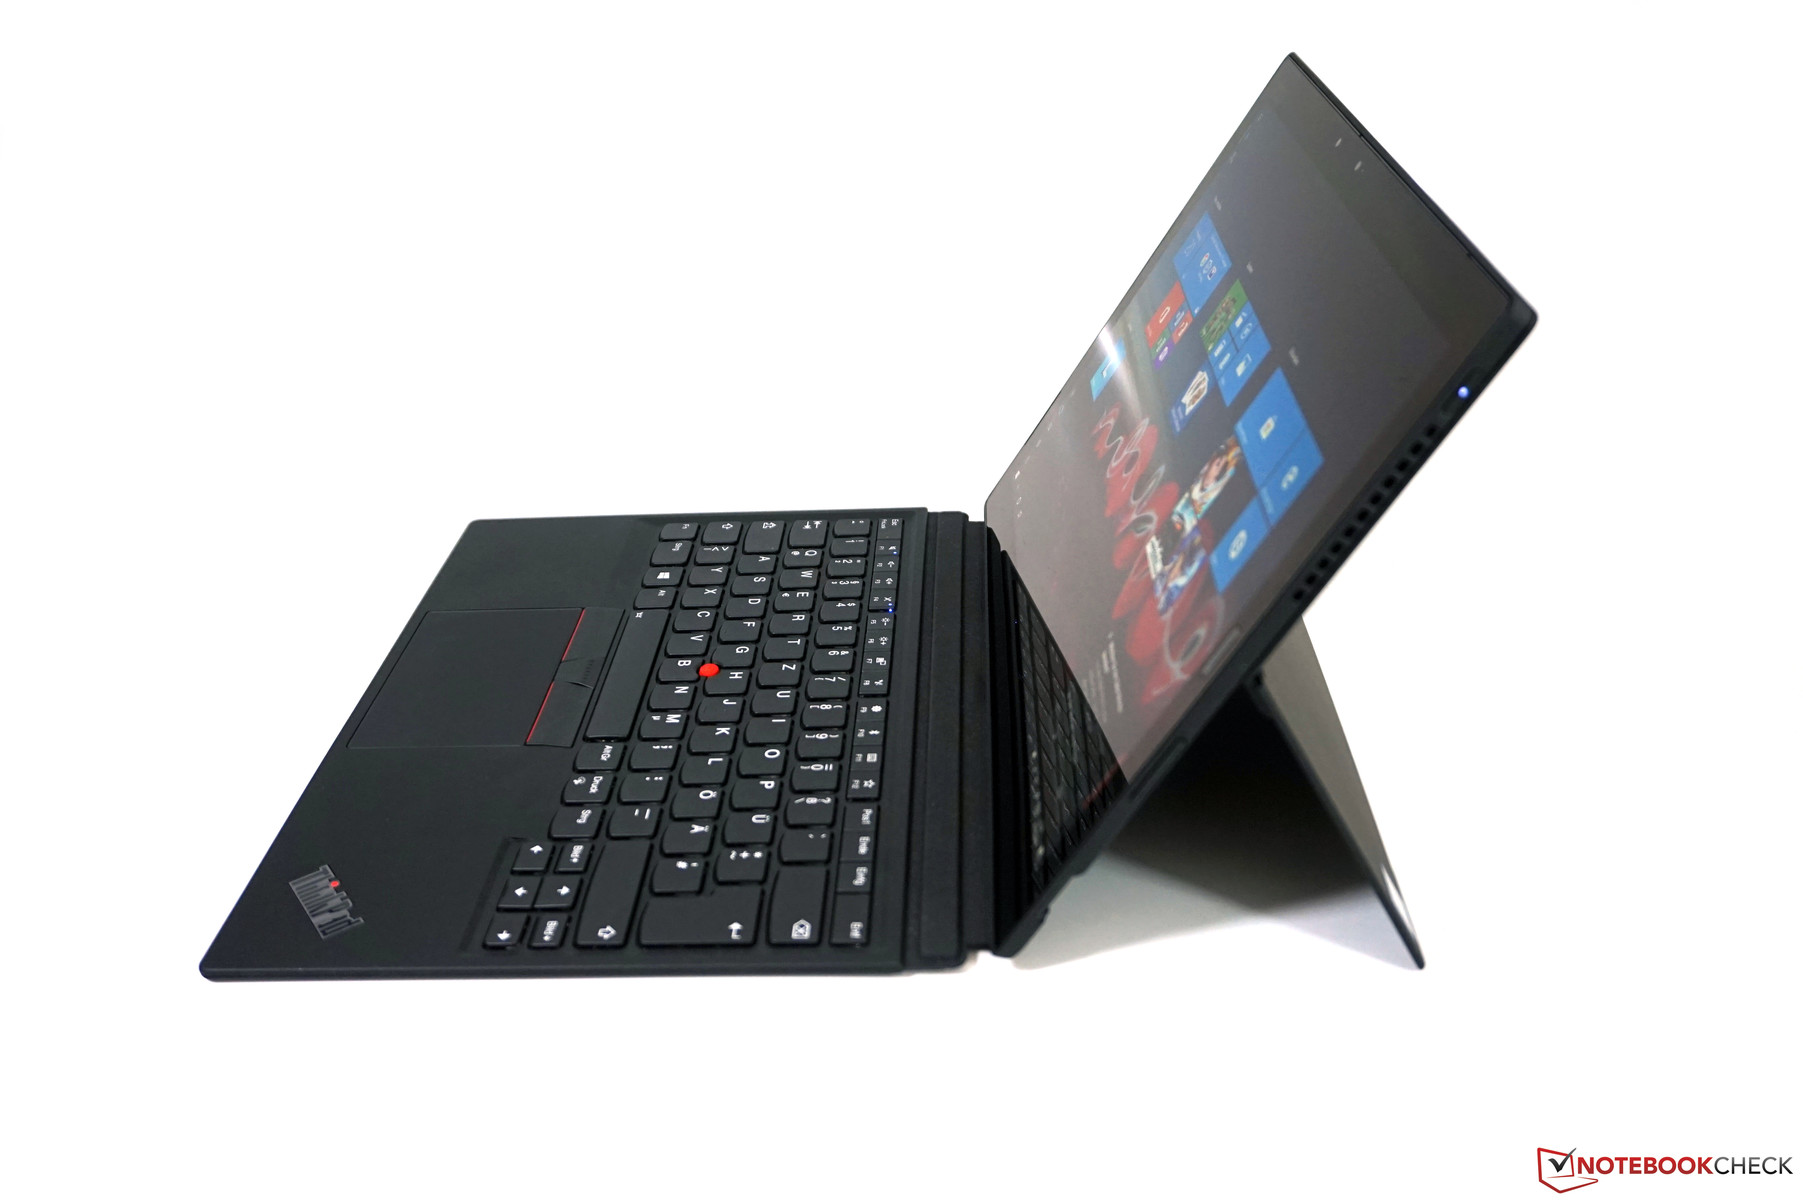 Lenovo thinkpad x1 tablet review tessaiga